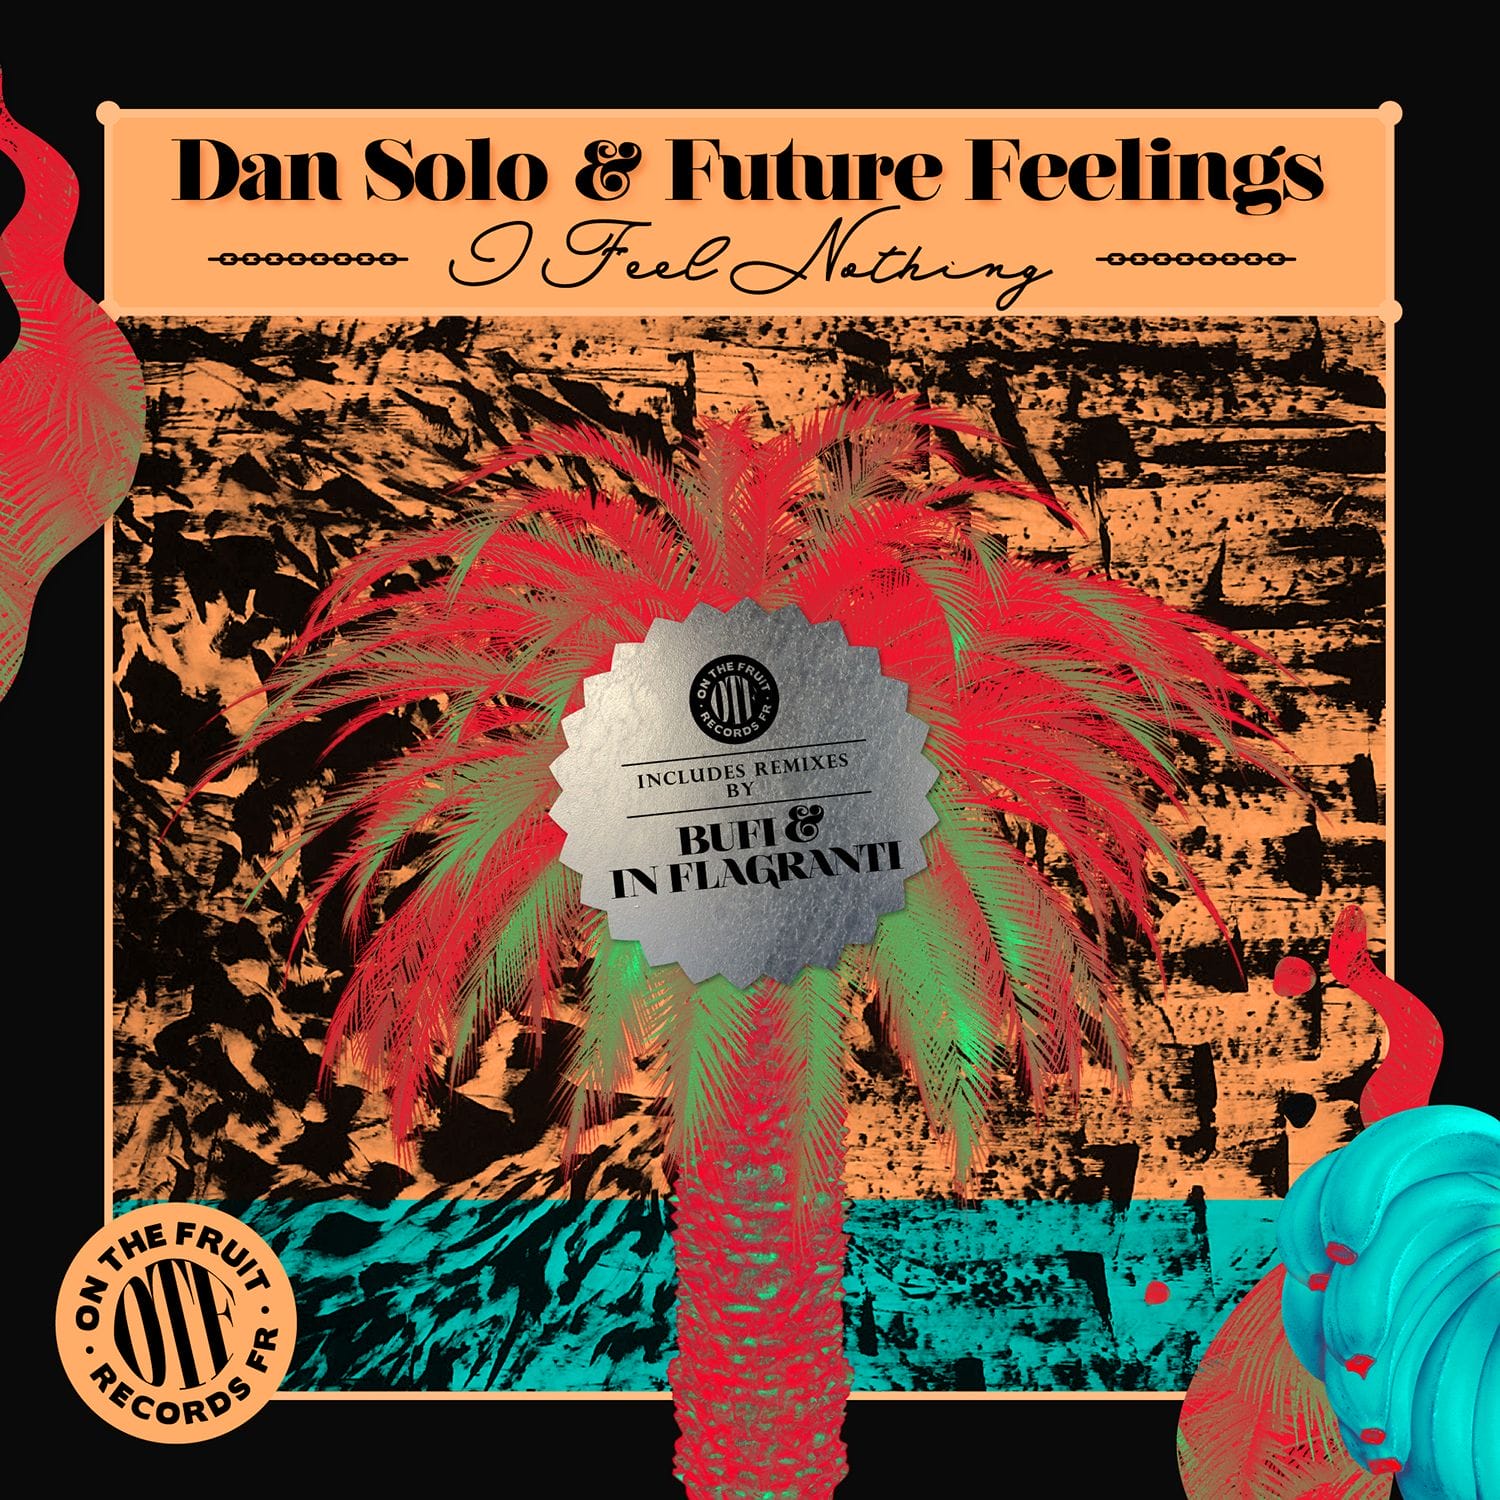 Dan Solo & Future Feelings - I Feel Nothing 6